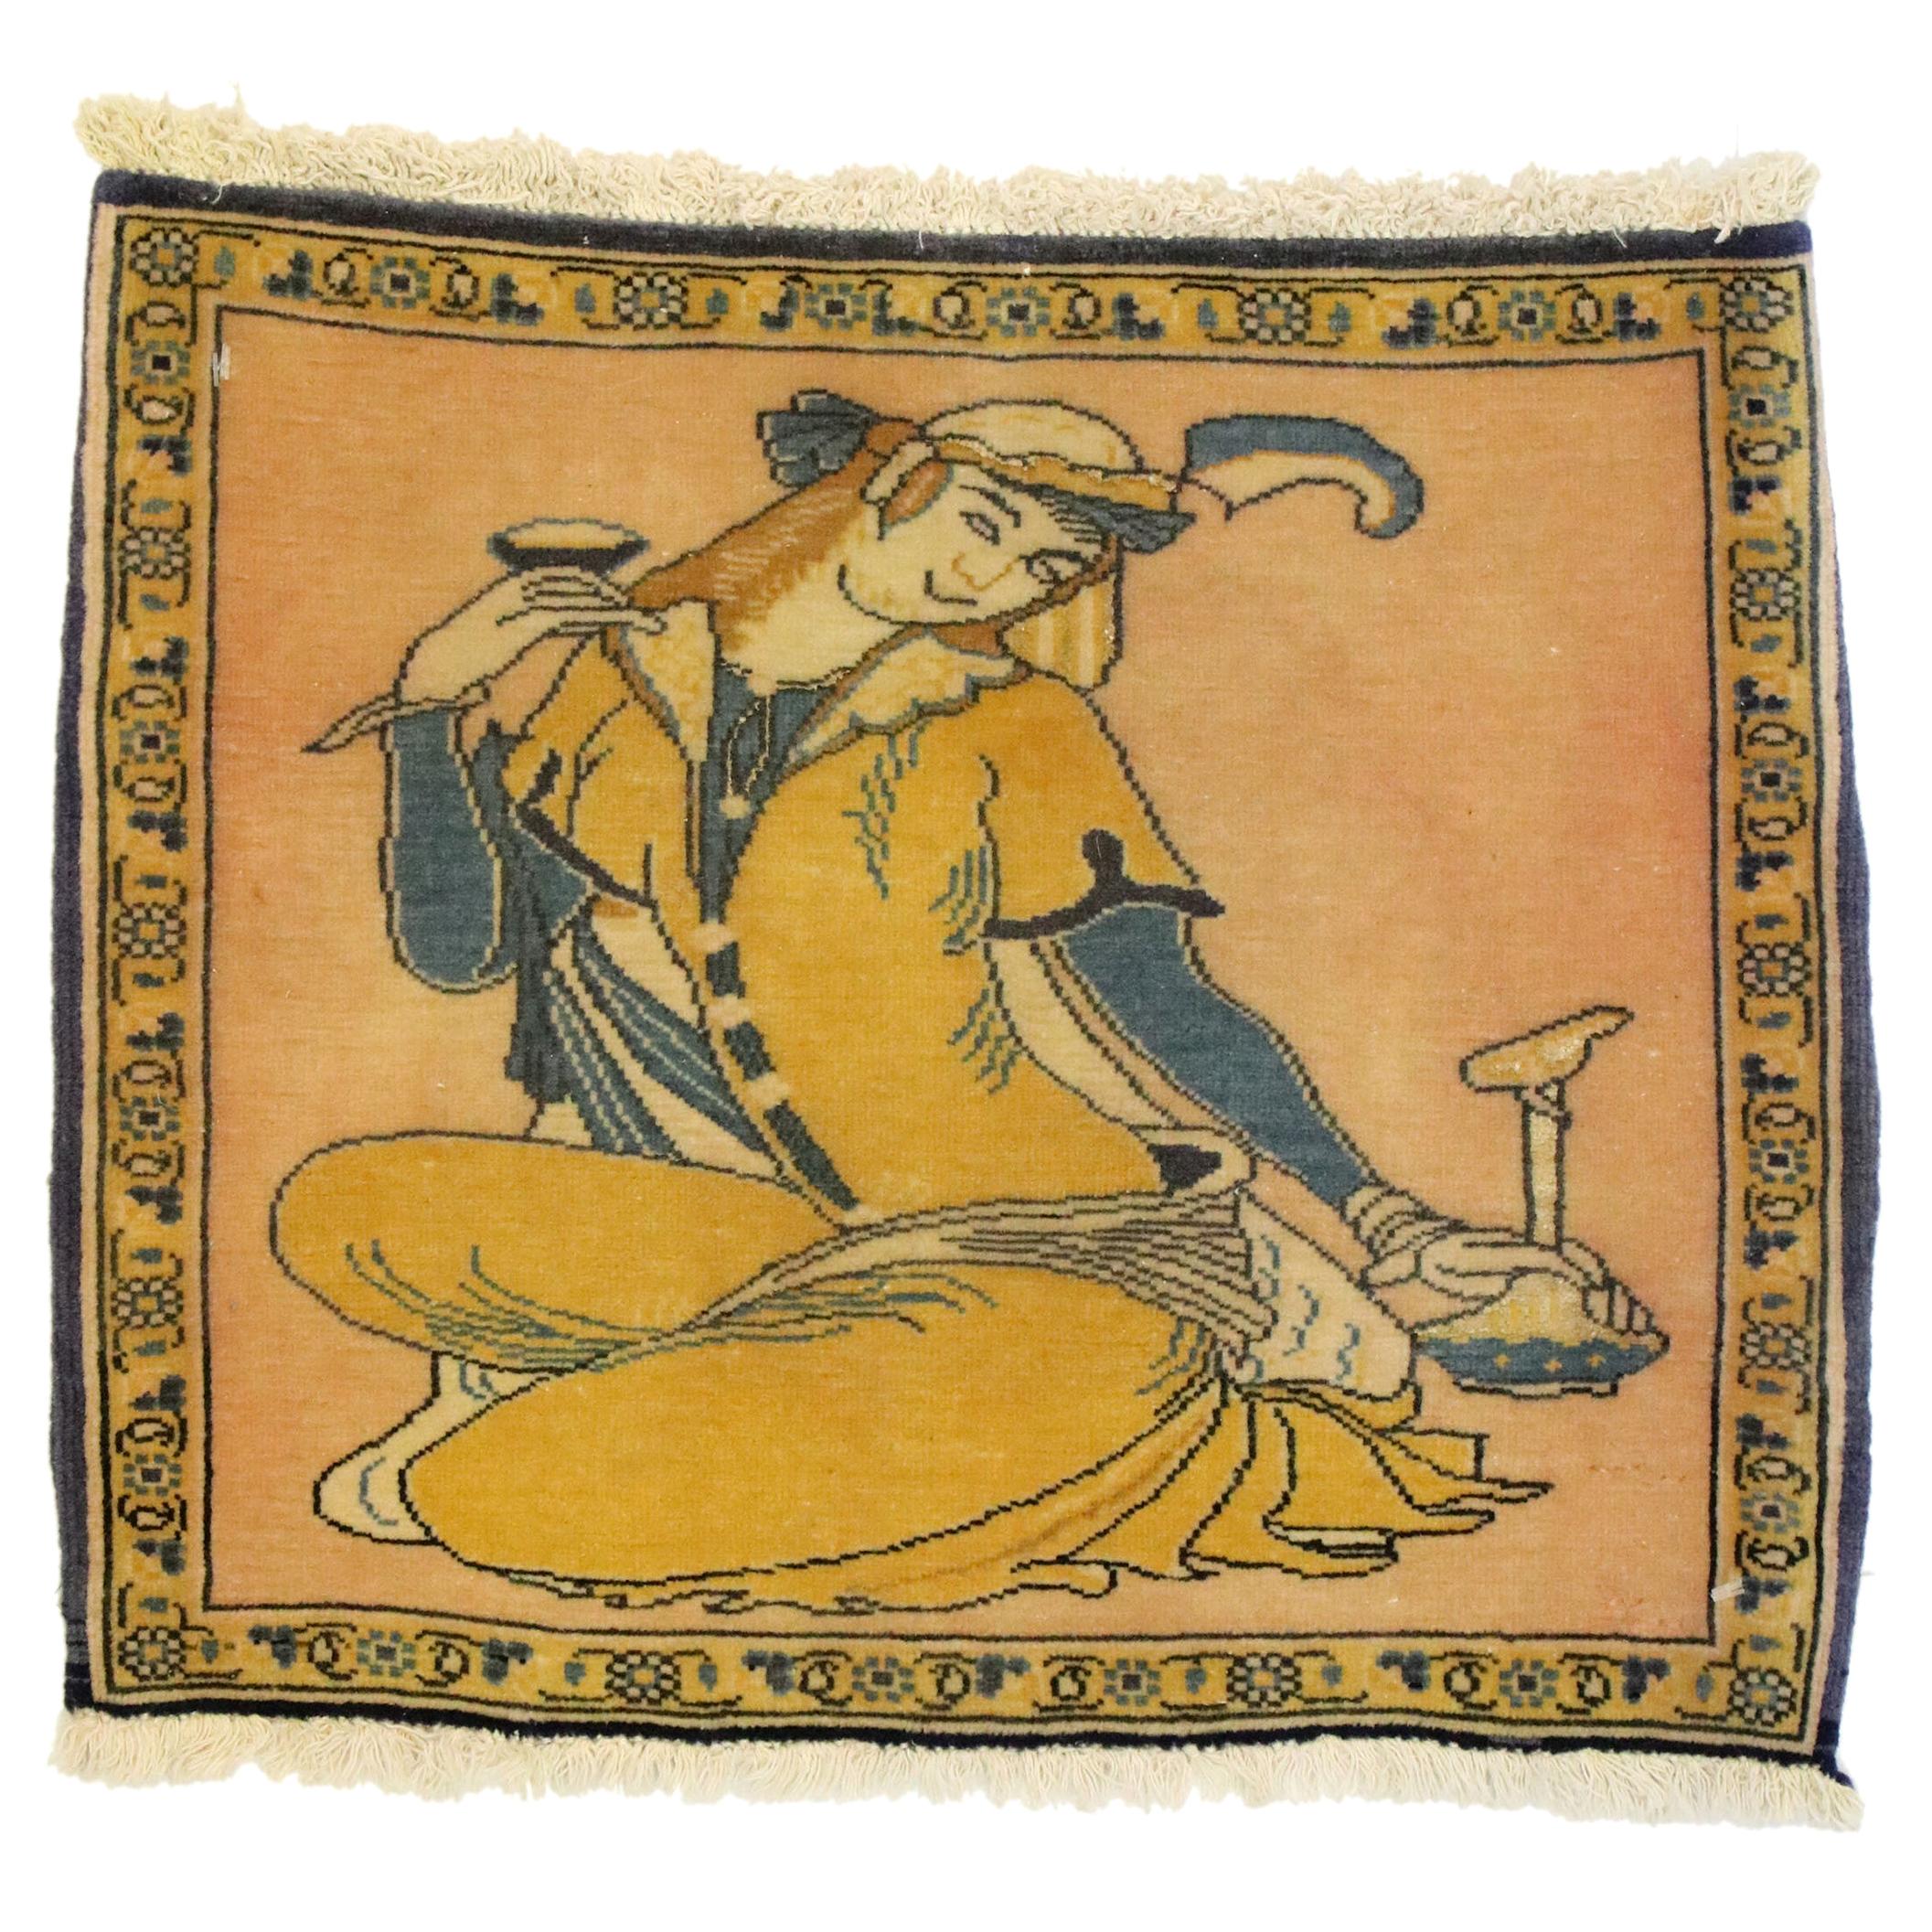 Vintage Persischer Khamseh-Bilderteppich mit Dervish-Szene, Persischer Wandbehang